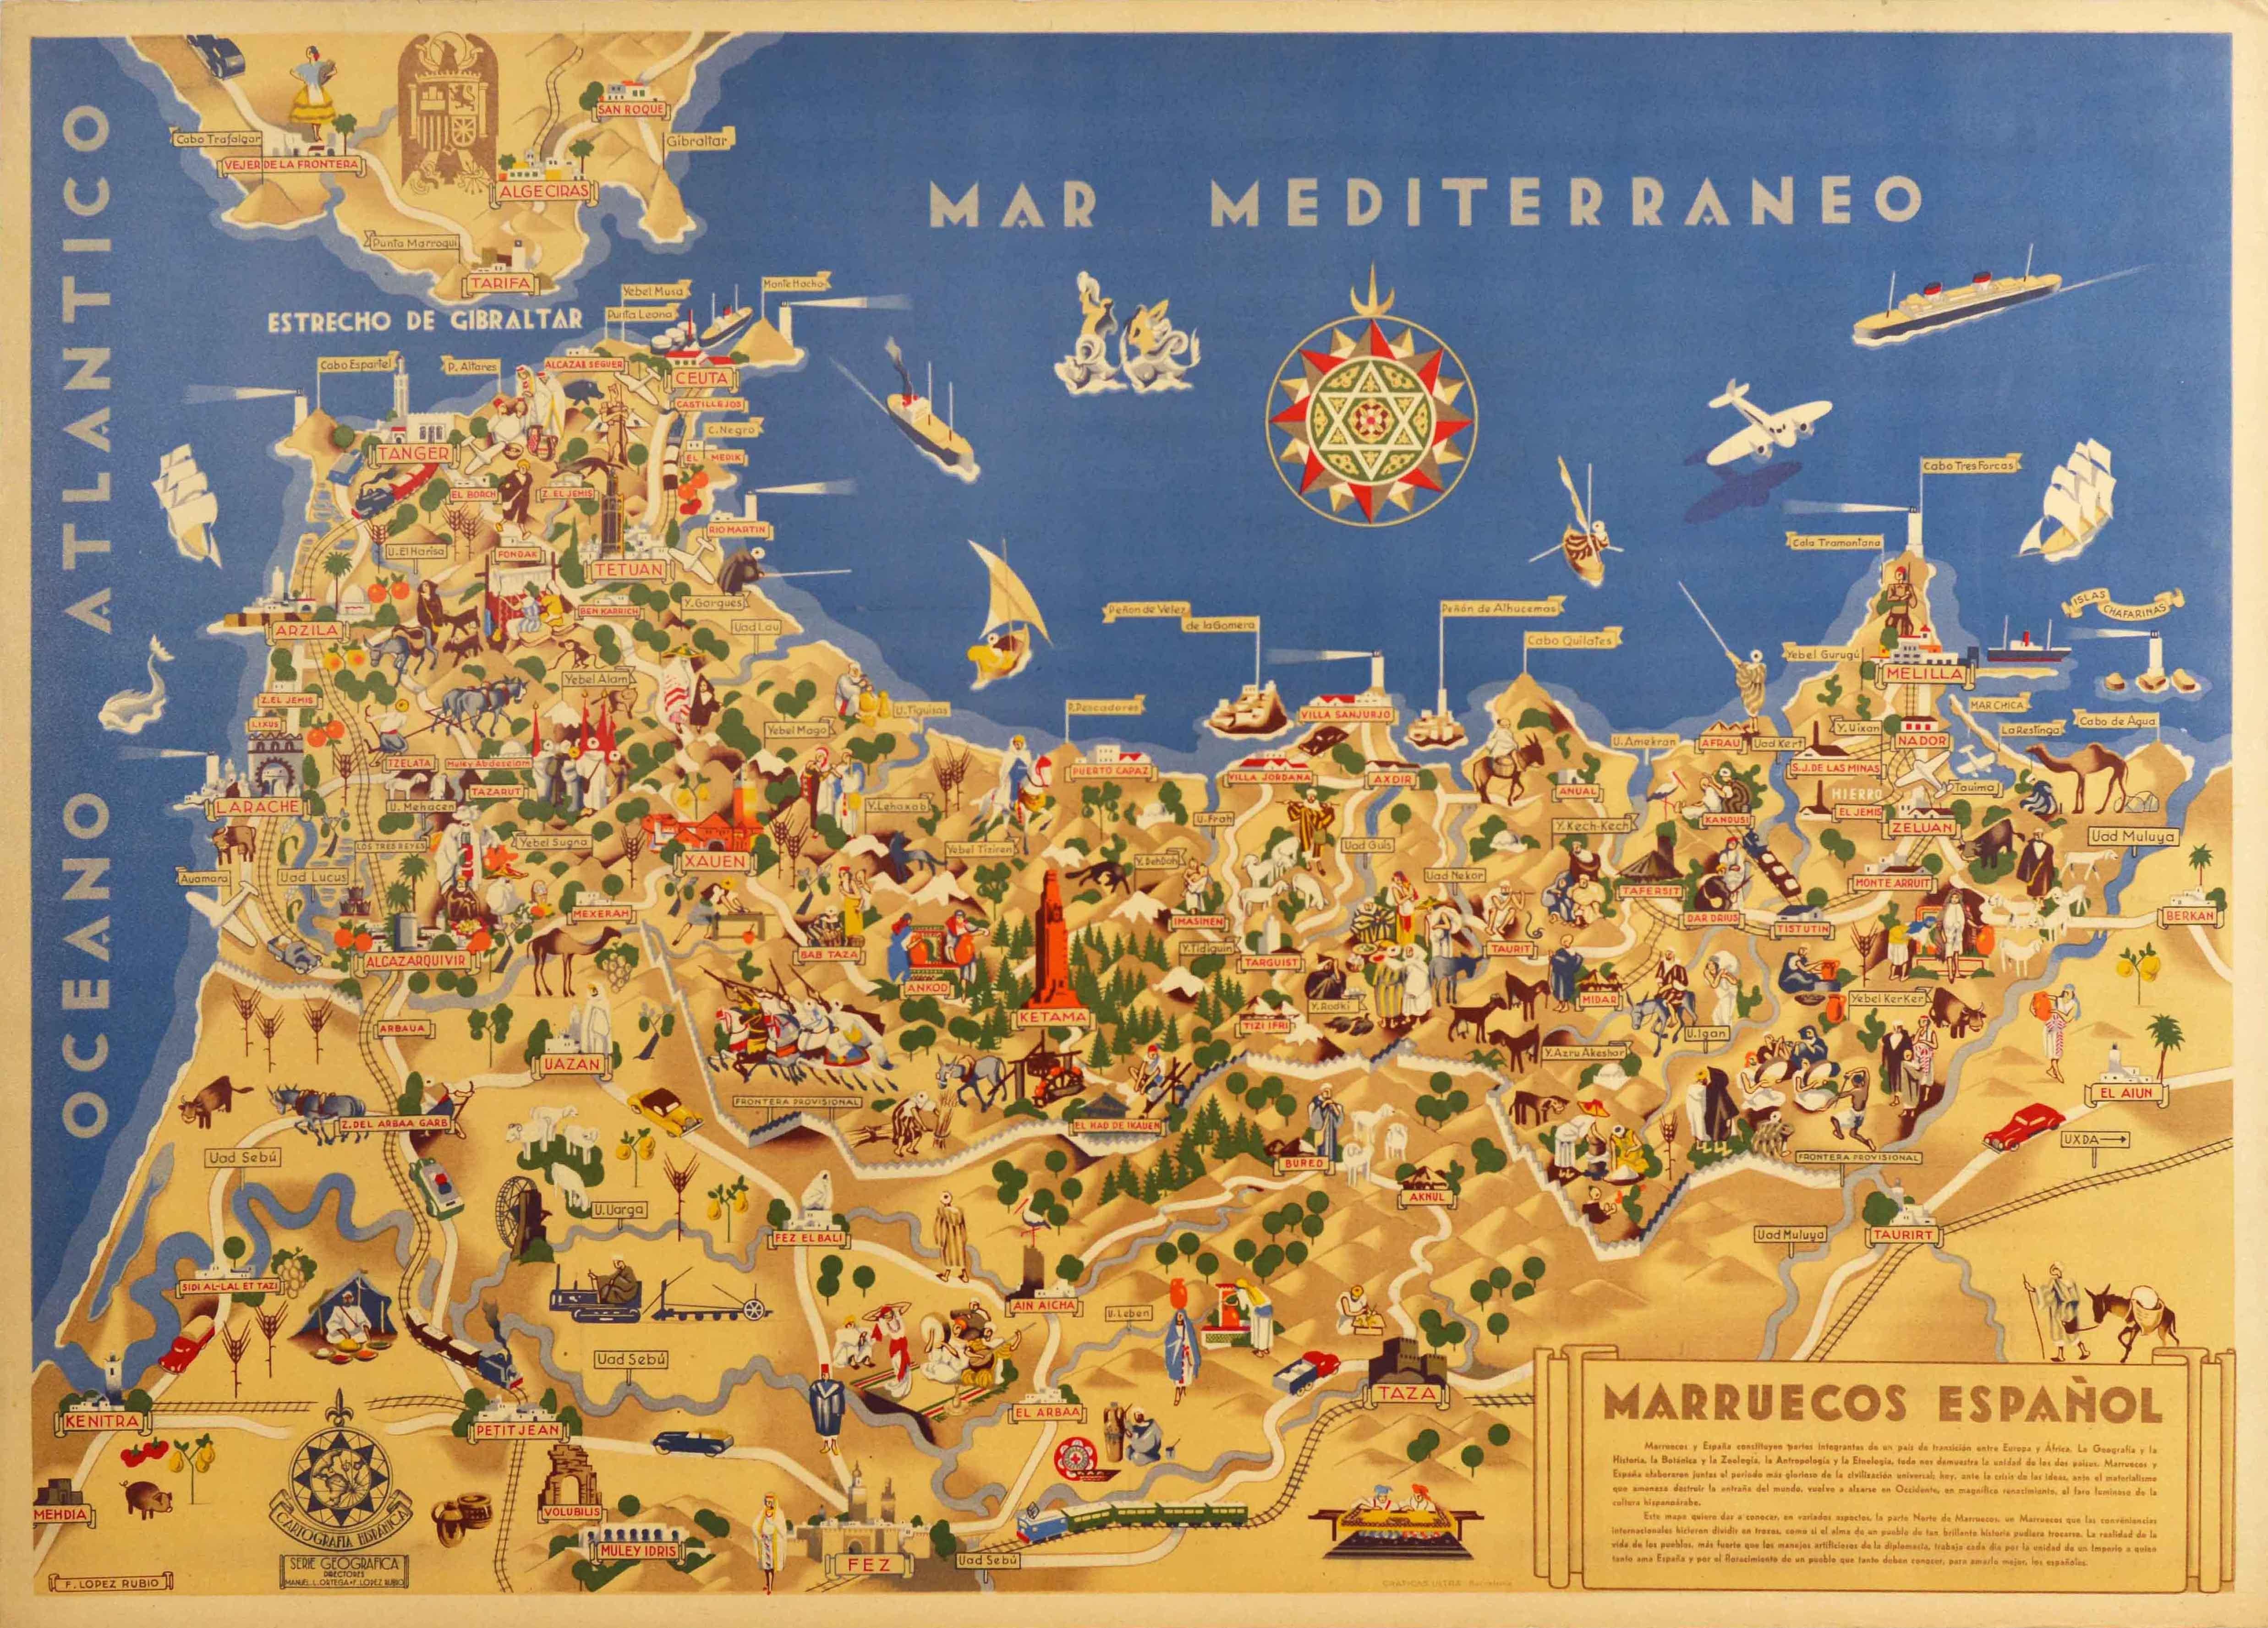 F Lopez Rubio Print - Original Vintage Map Poster Marruecos Espanol Spanish Morocco Illustrated Design